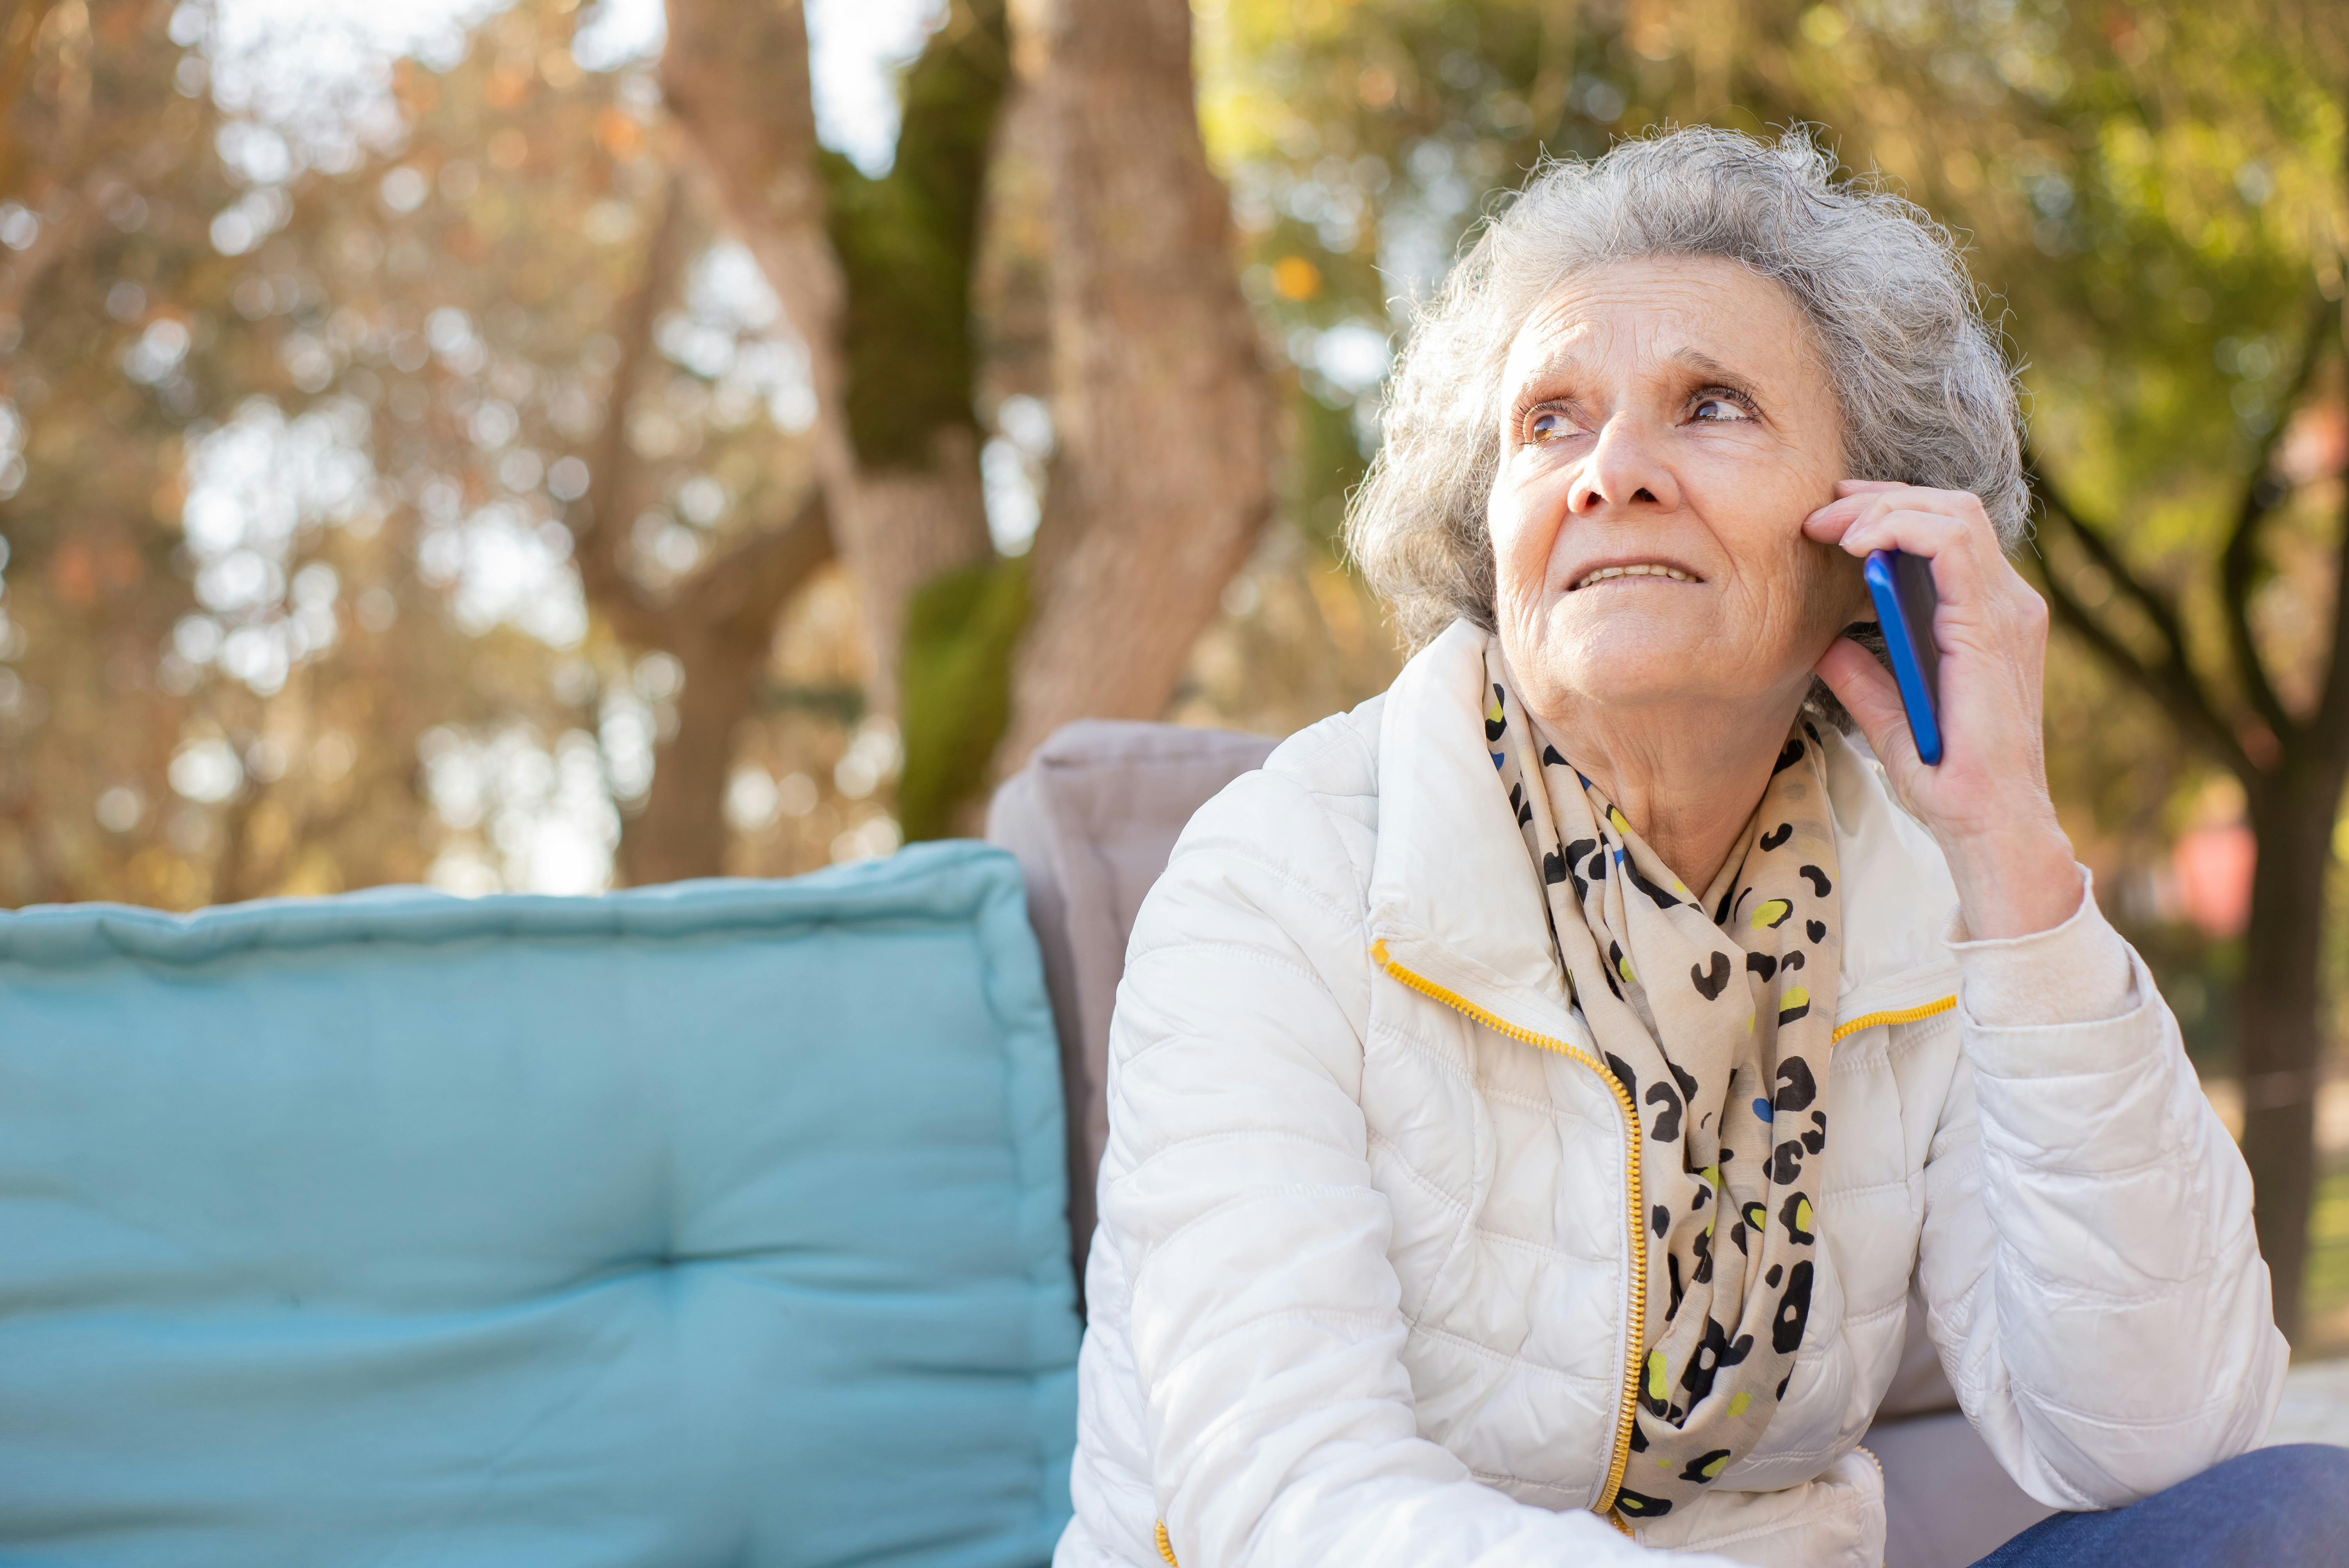 Elderly lady talking on the phone | Source: Pexels